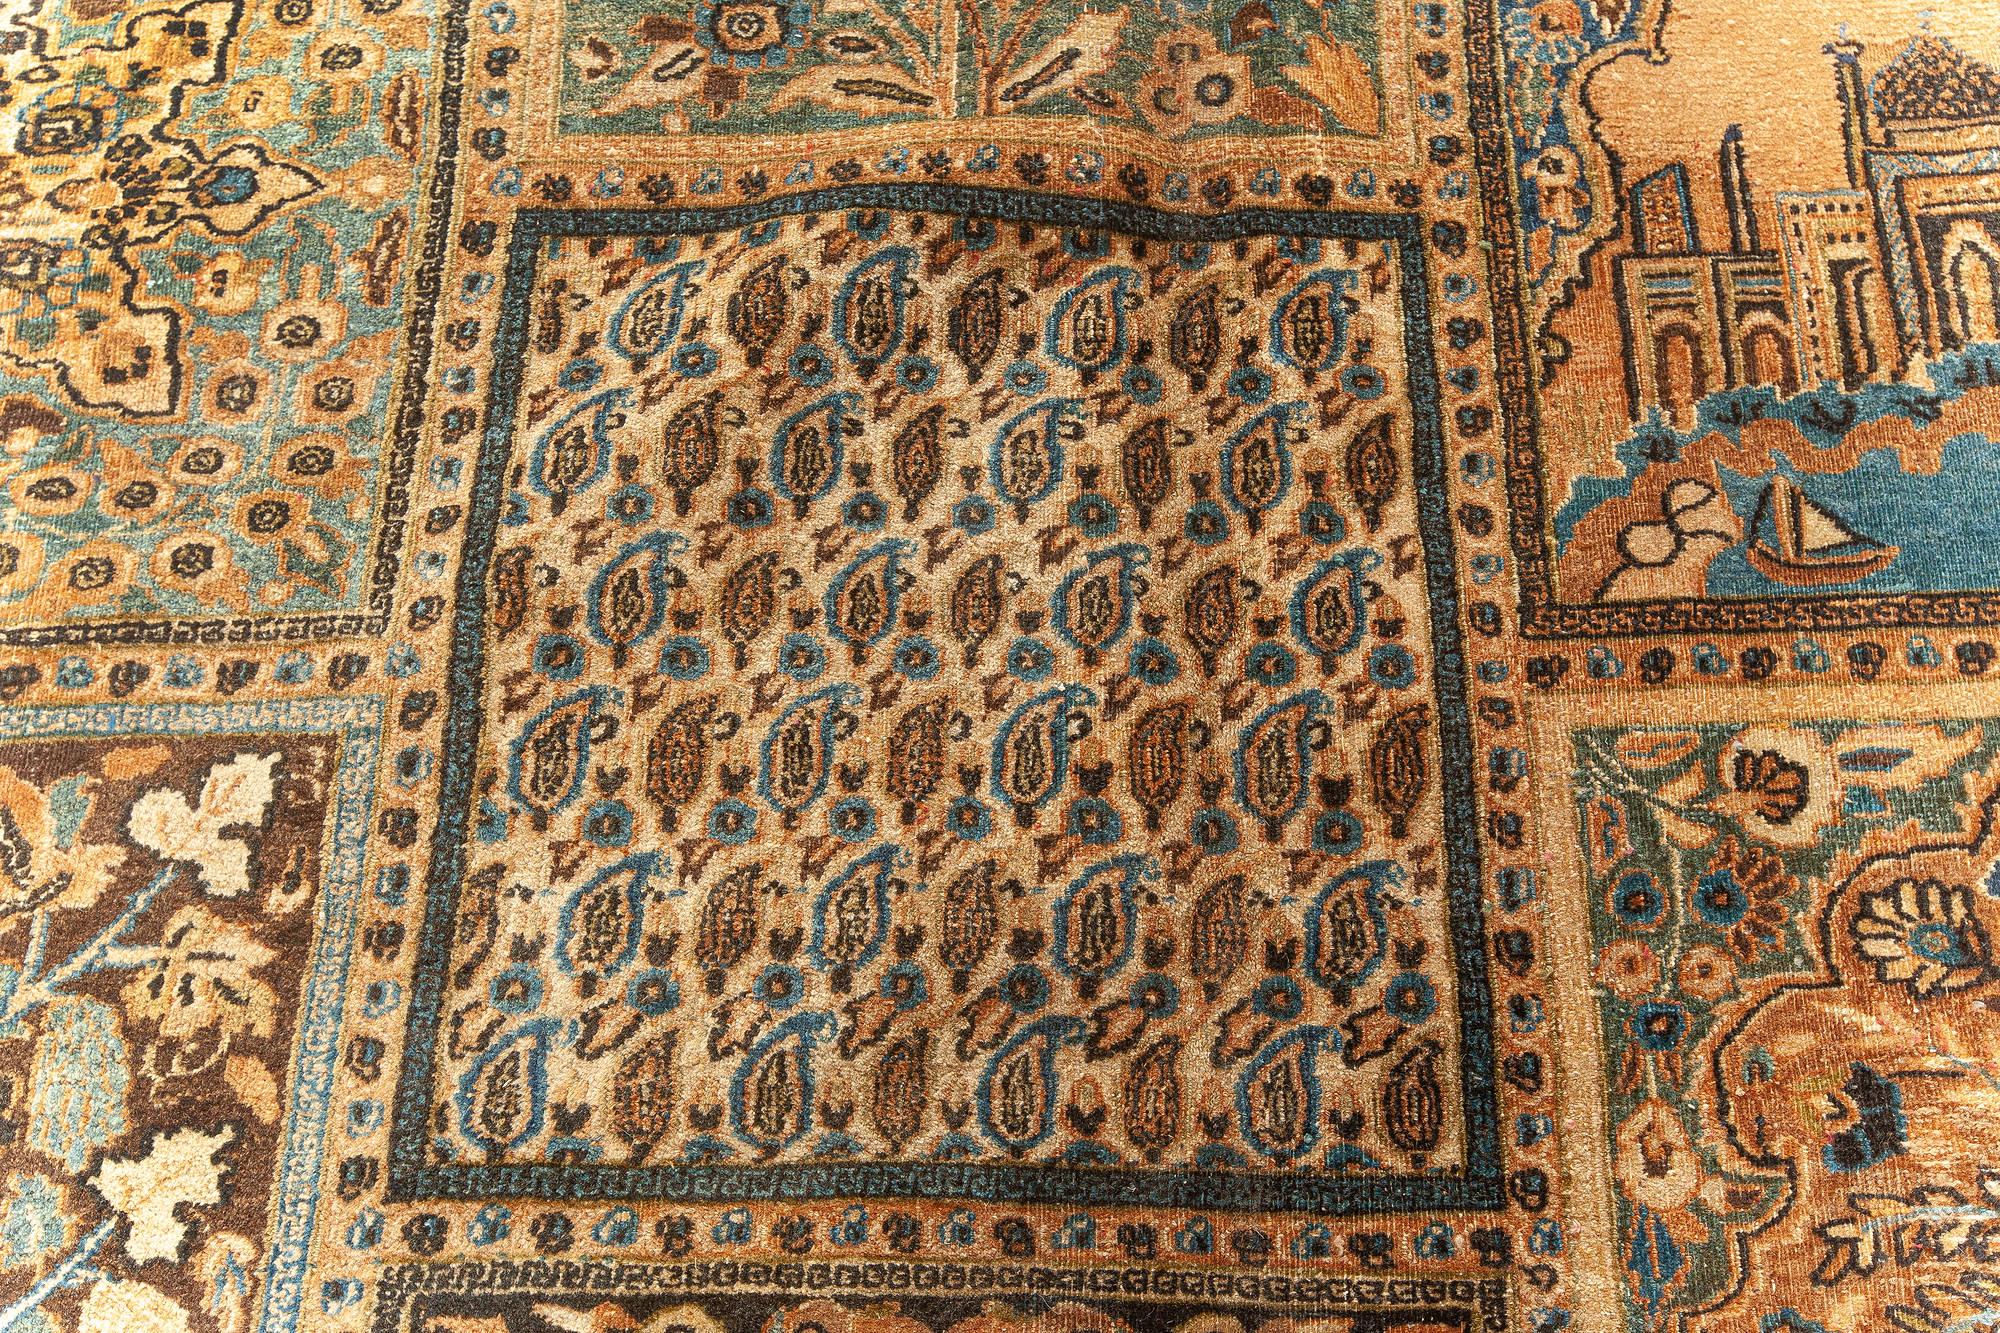 Early 20th century Persian Meshad handmade wool rug
Size: 13'0